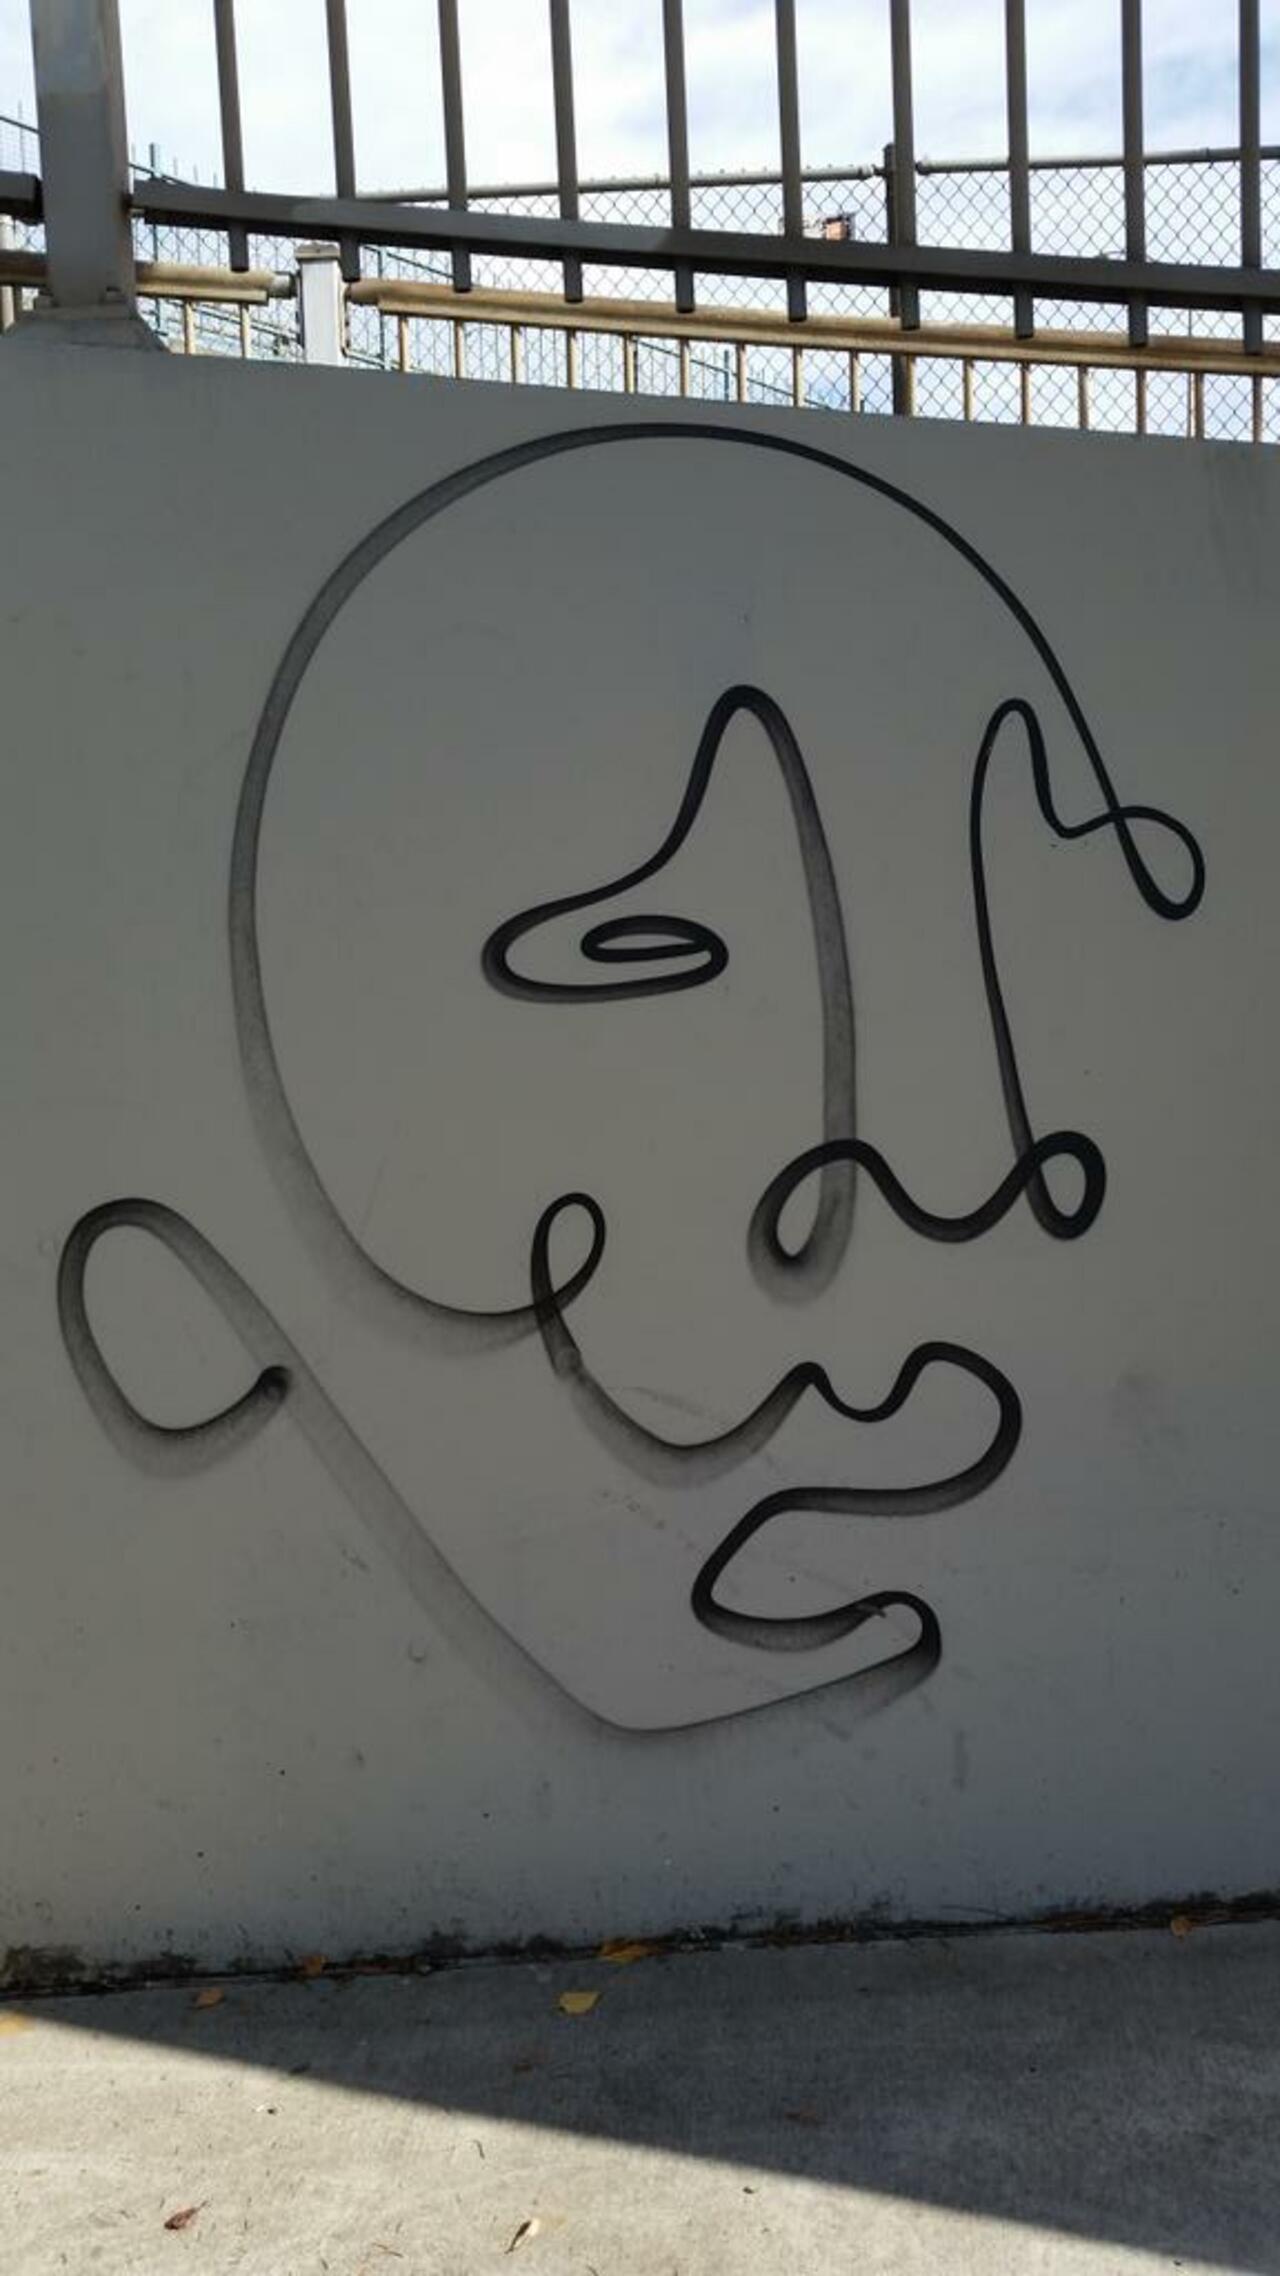 Squiggle drawing #graffiti #streetart http://t.co/SXCdnyCt4N